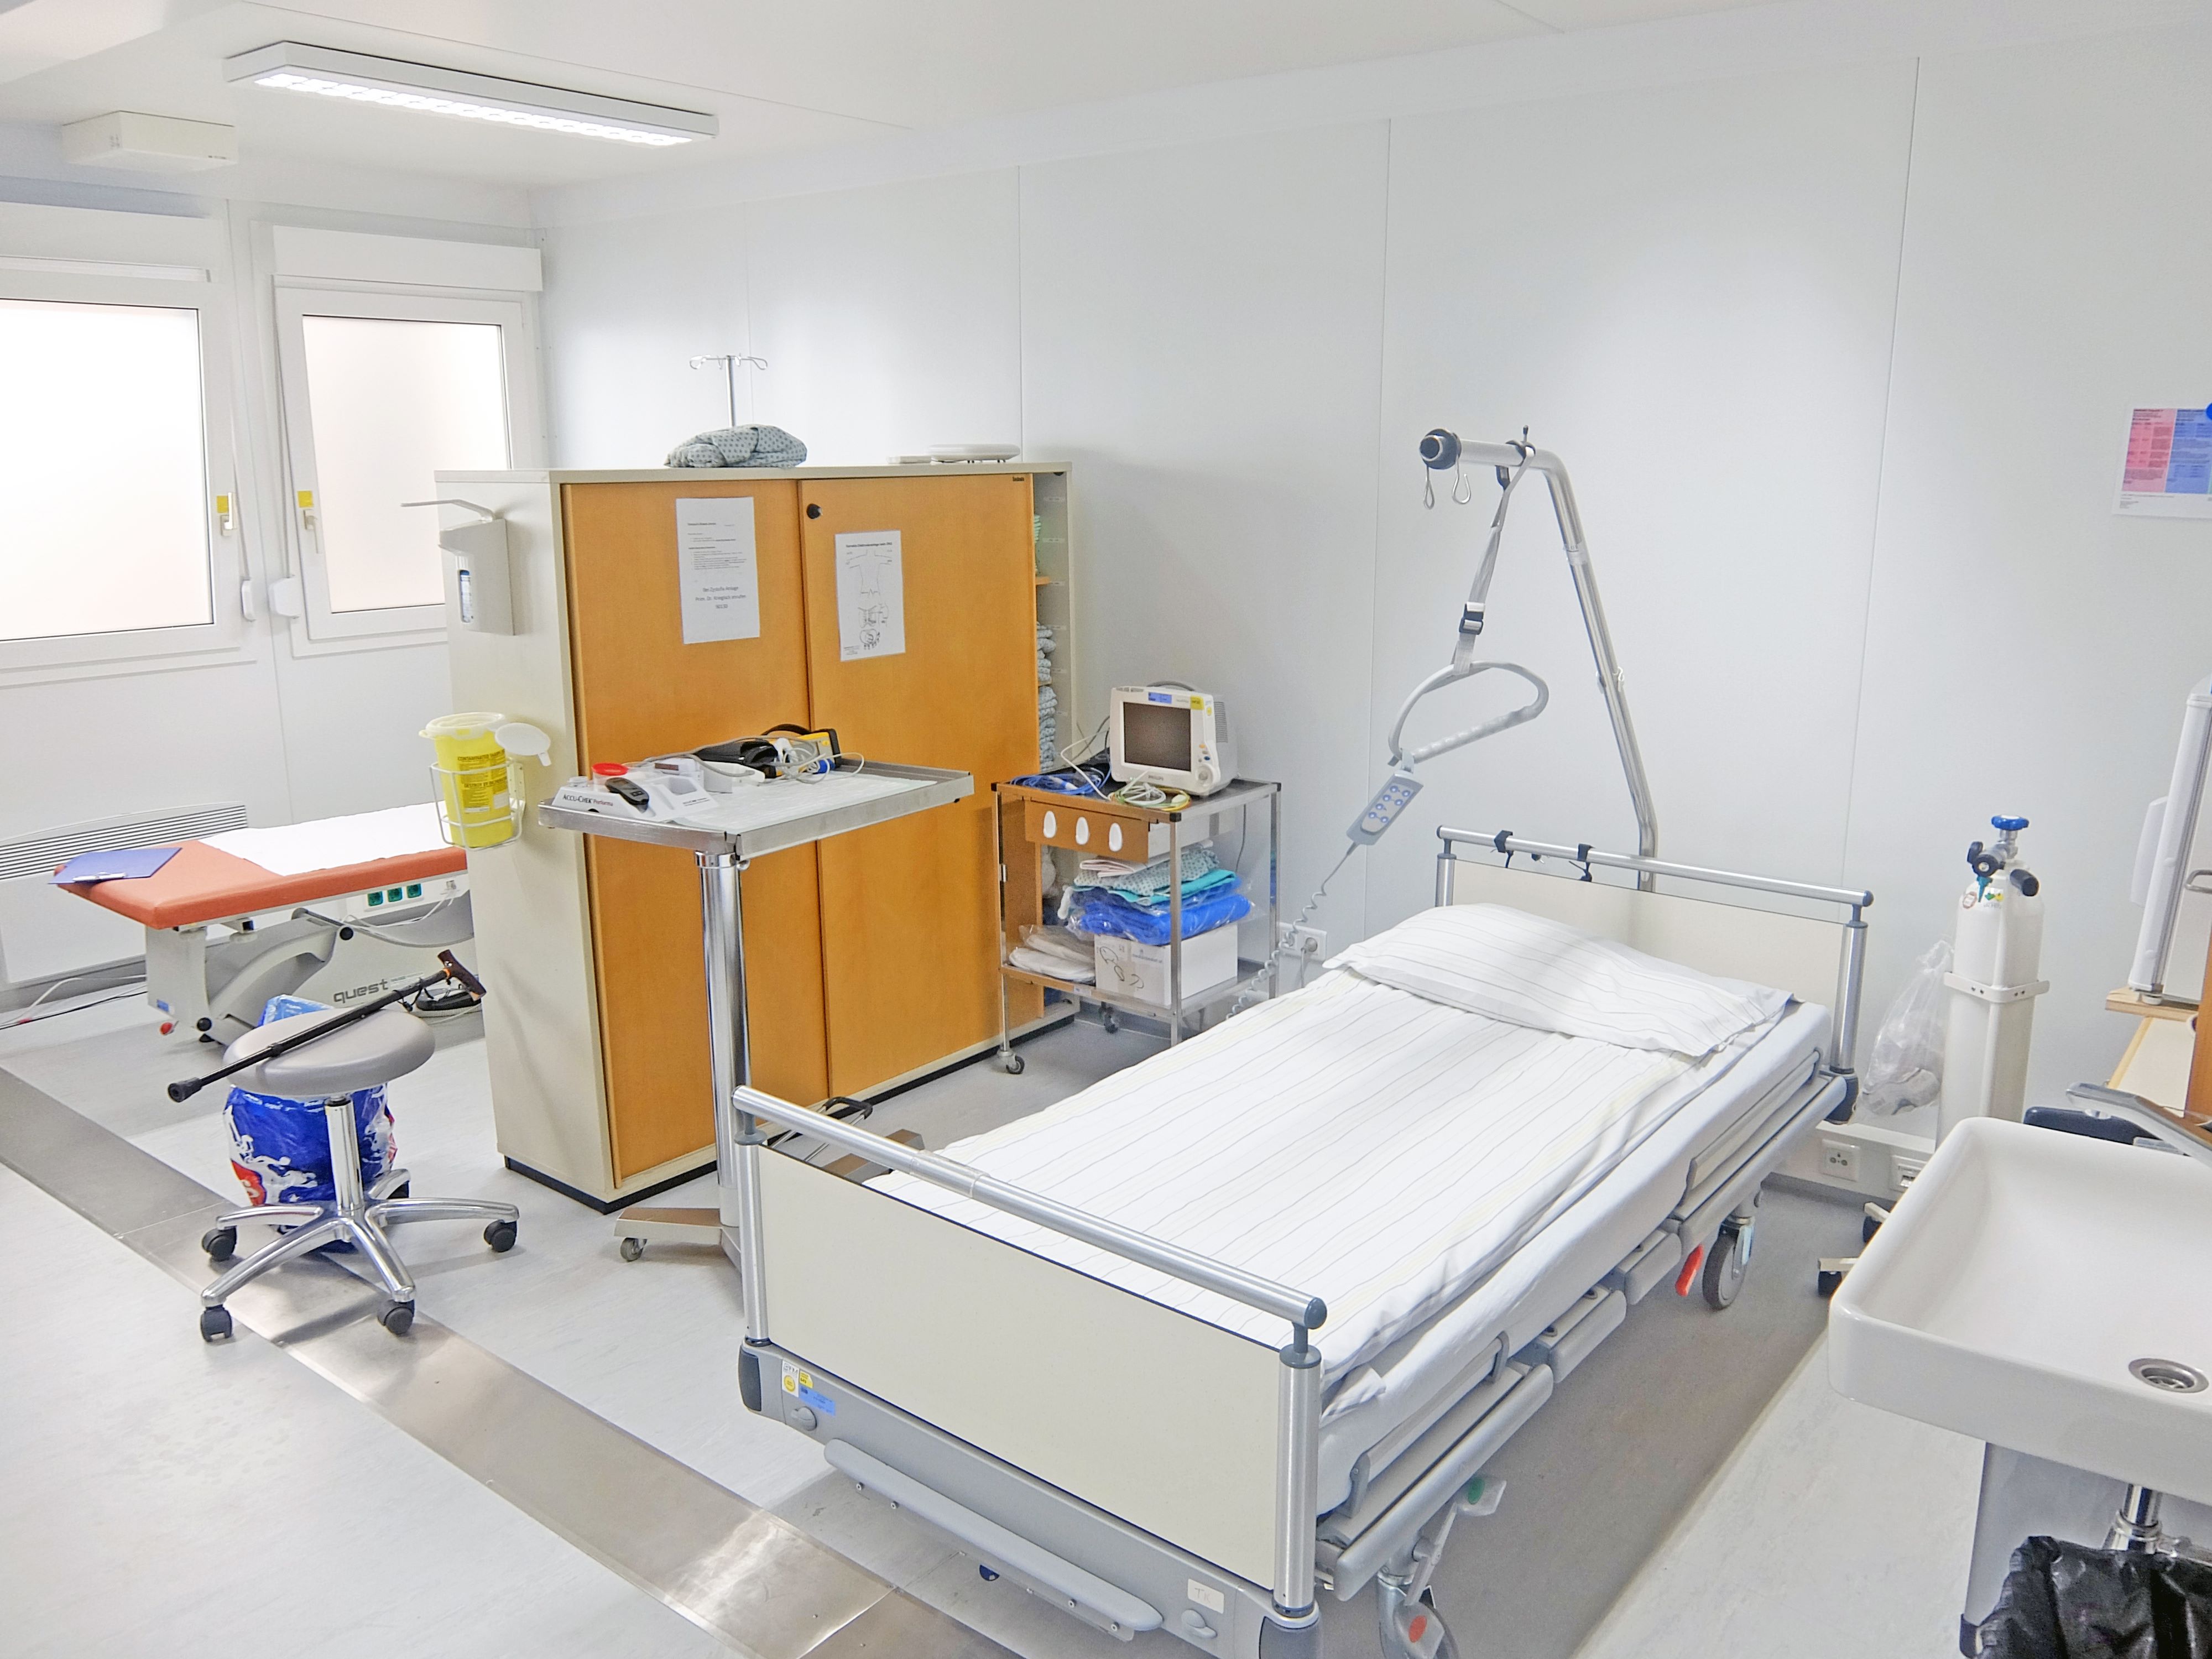 Hospital ward at State Hospital Tamsweg (AT)